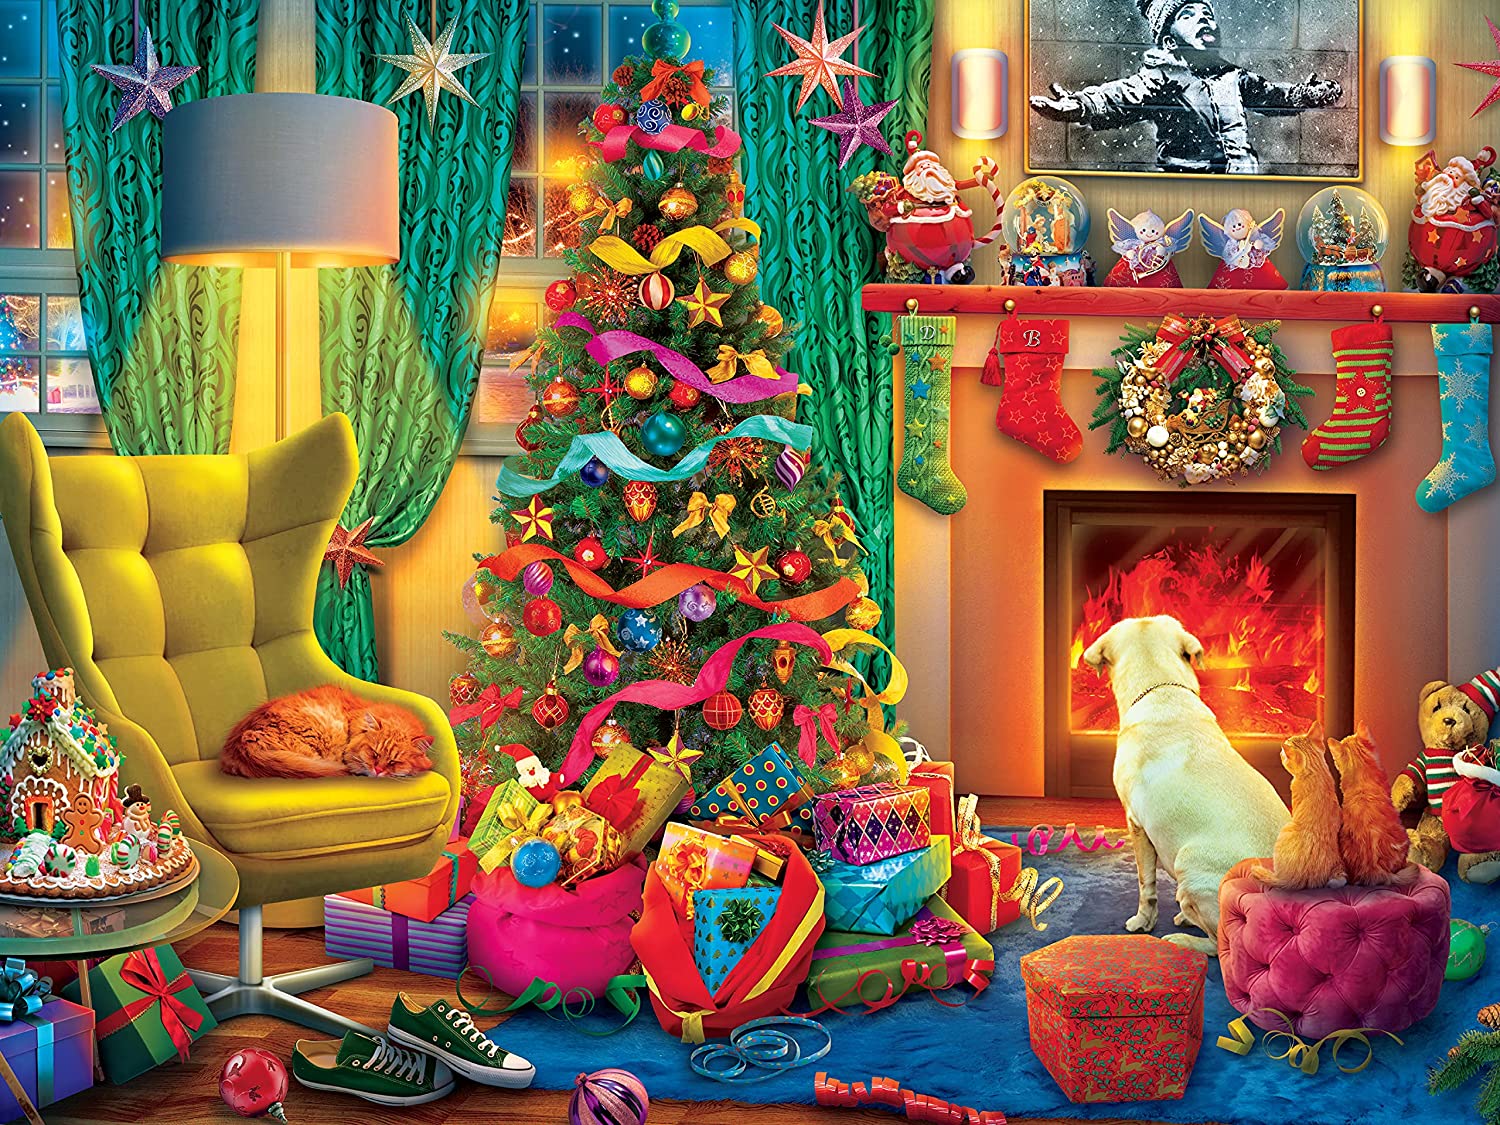 Ceaco Tis The Season Puzzle Santa's Gift for Snowman Puzzle 